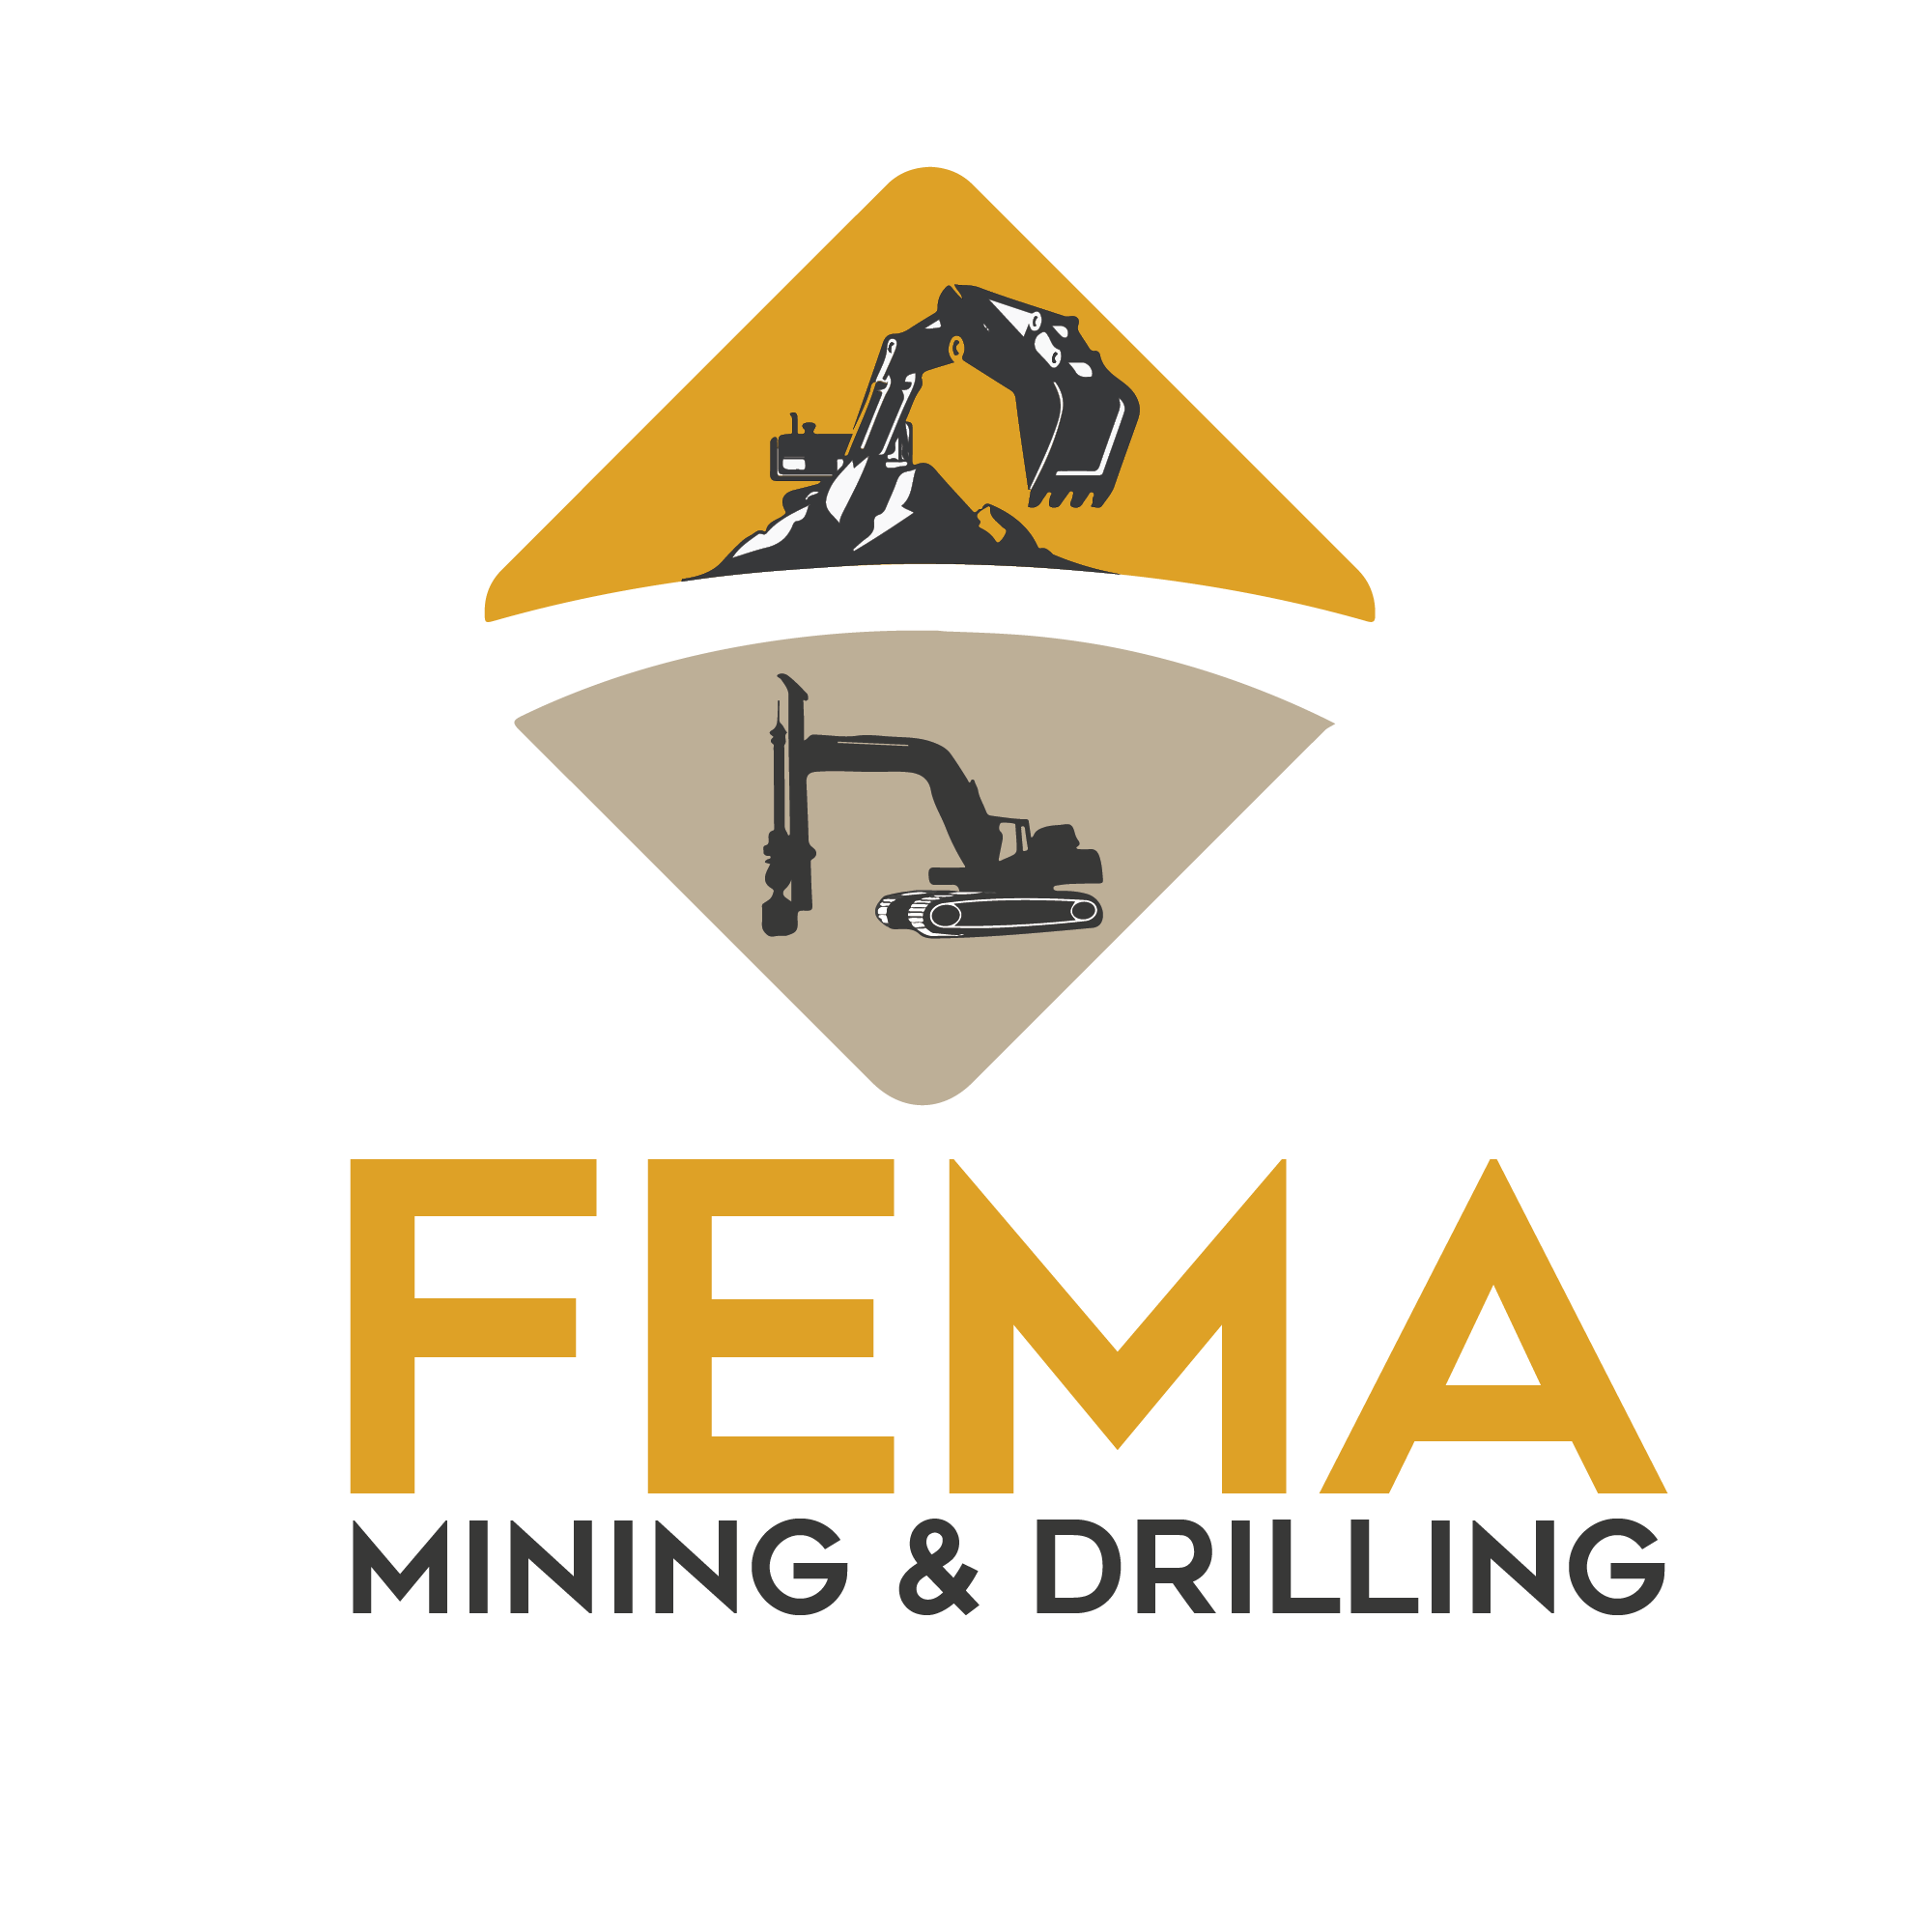 Fema Mining & Drilling Limited